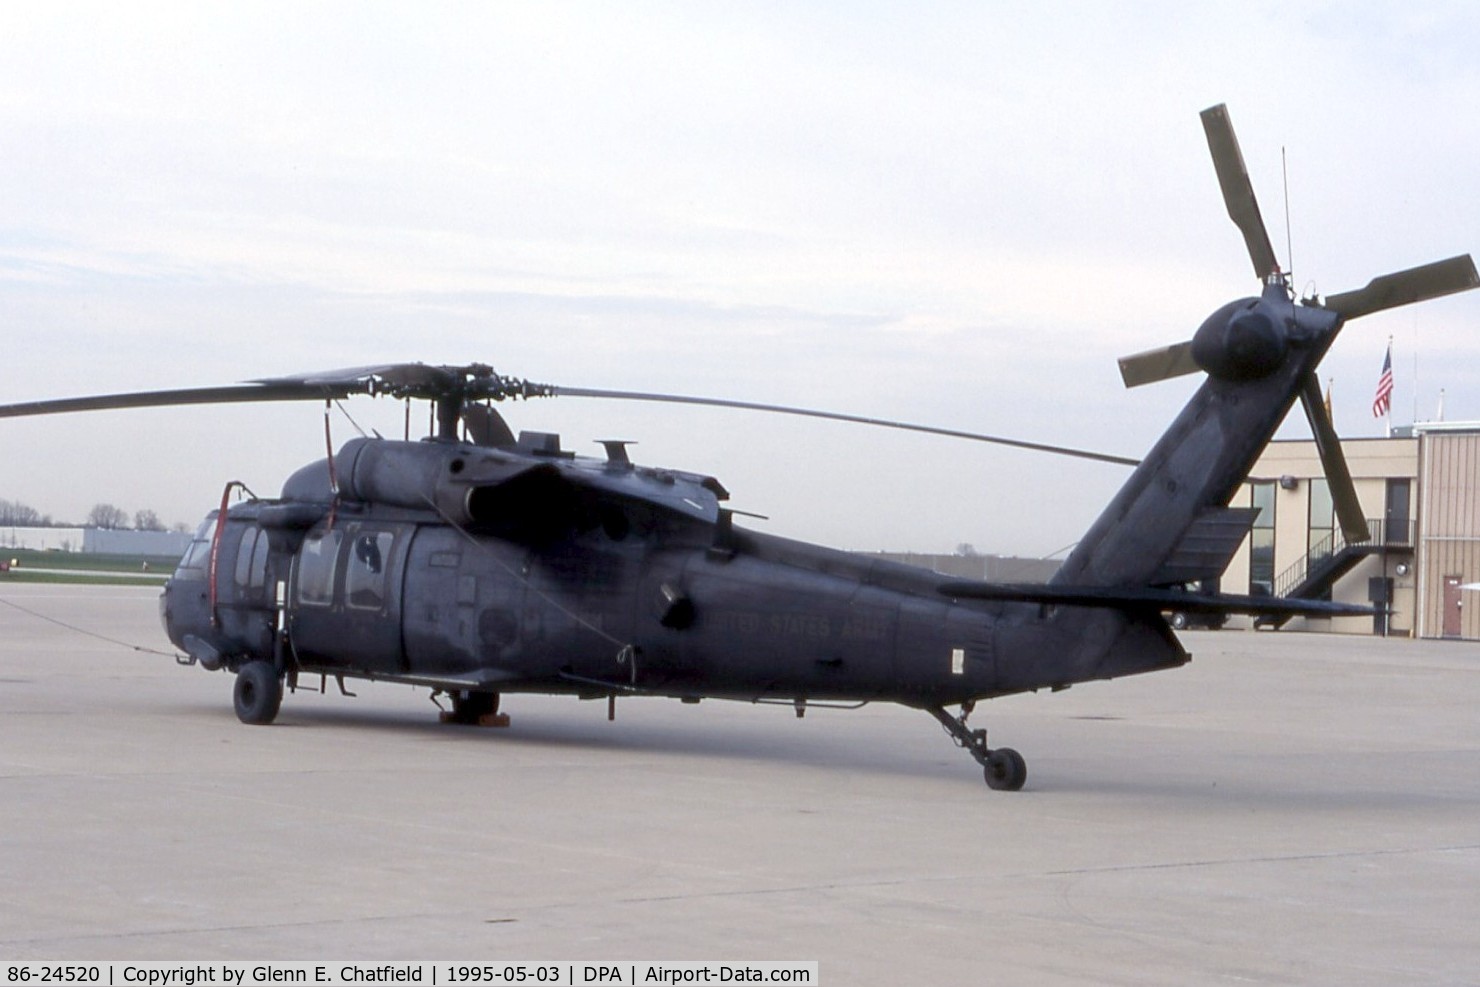 86-24520, 1986 Sikorsky MH-60A Black Hawk C/N 70-1020, MH-60A